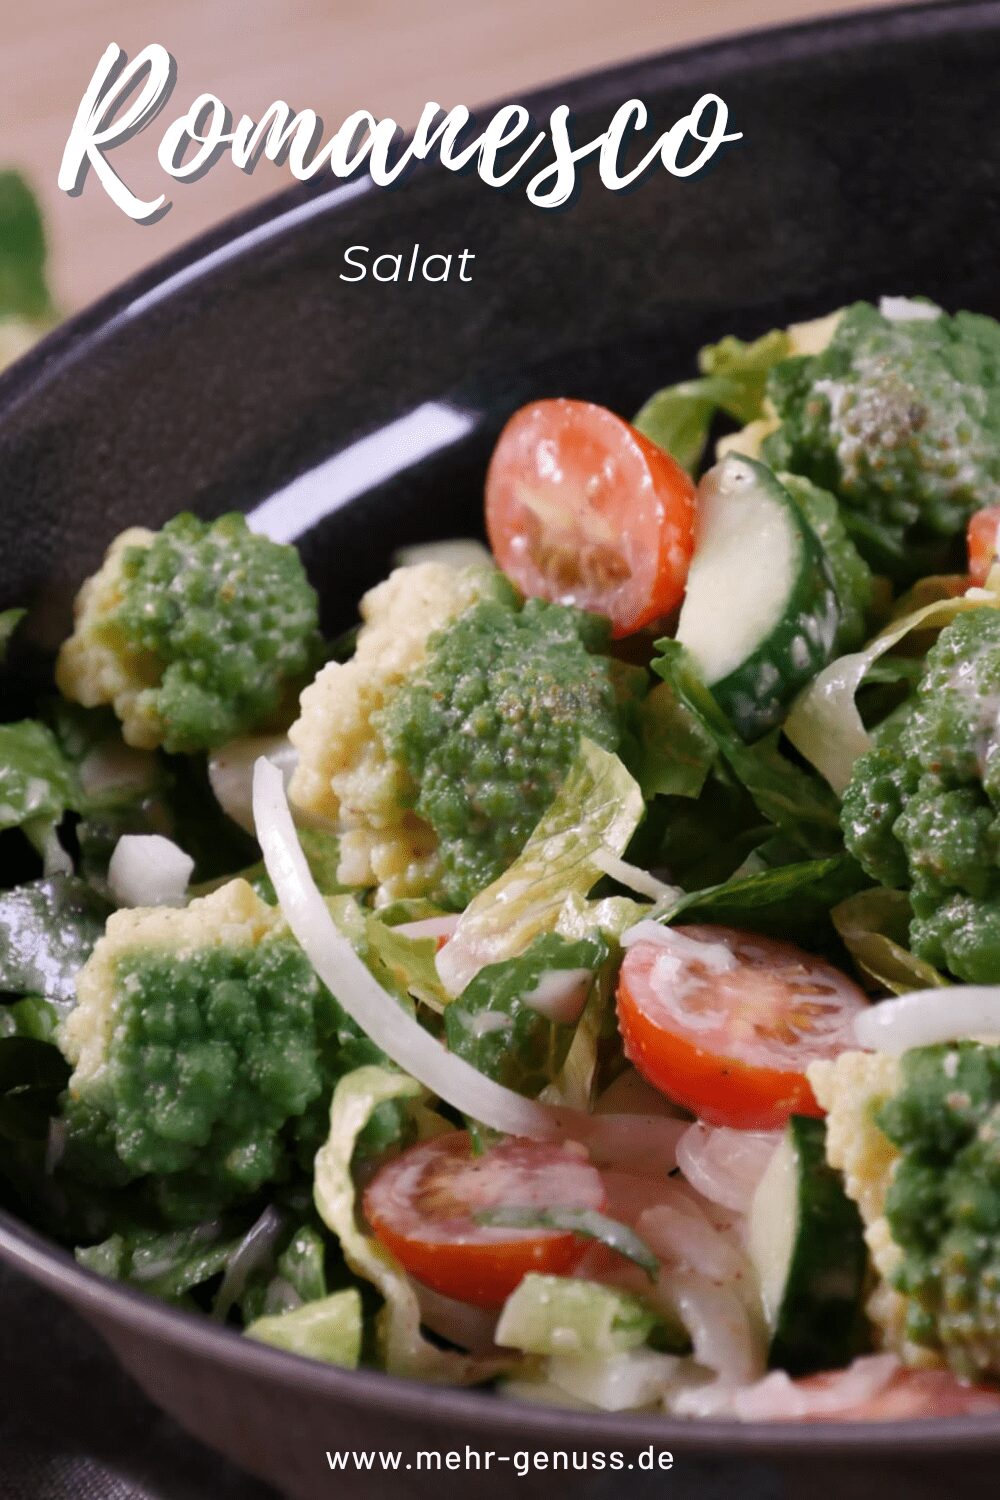 Romanesco Salat auf Pinterest